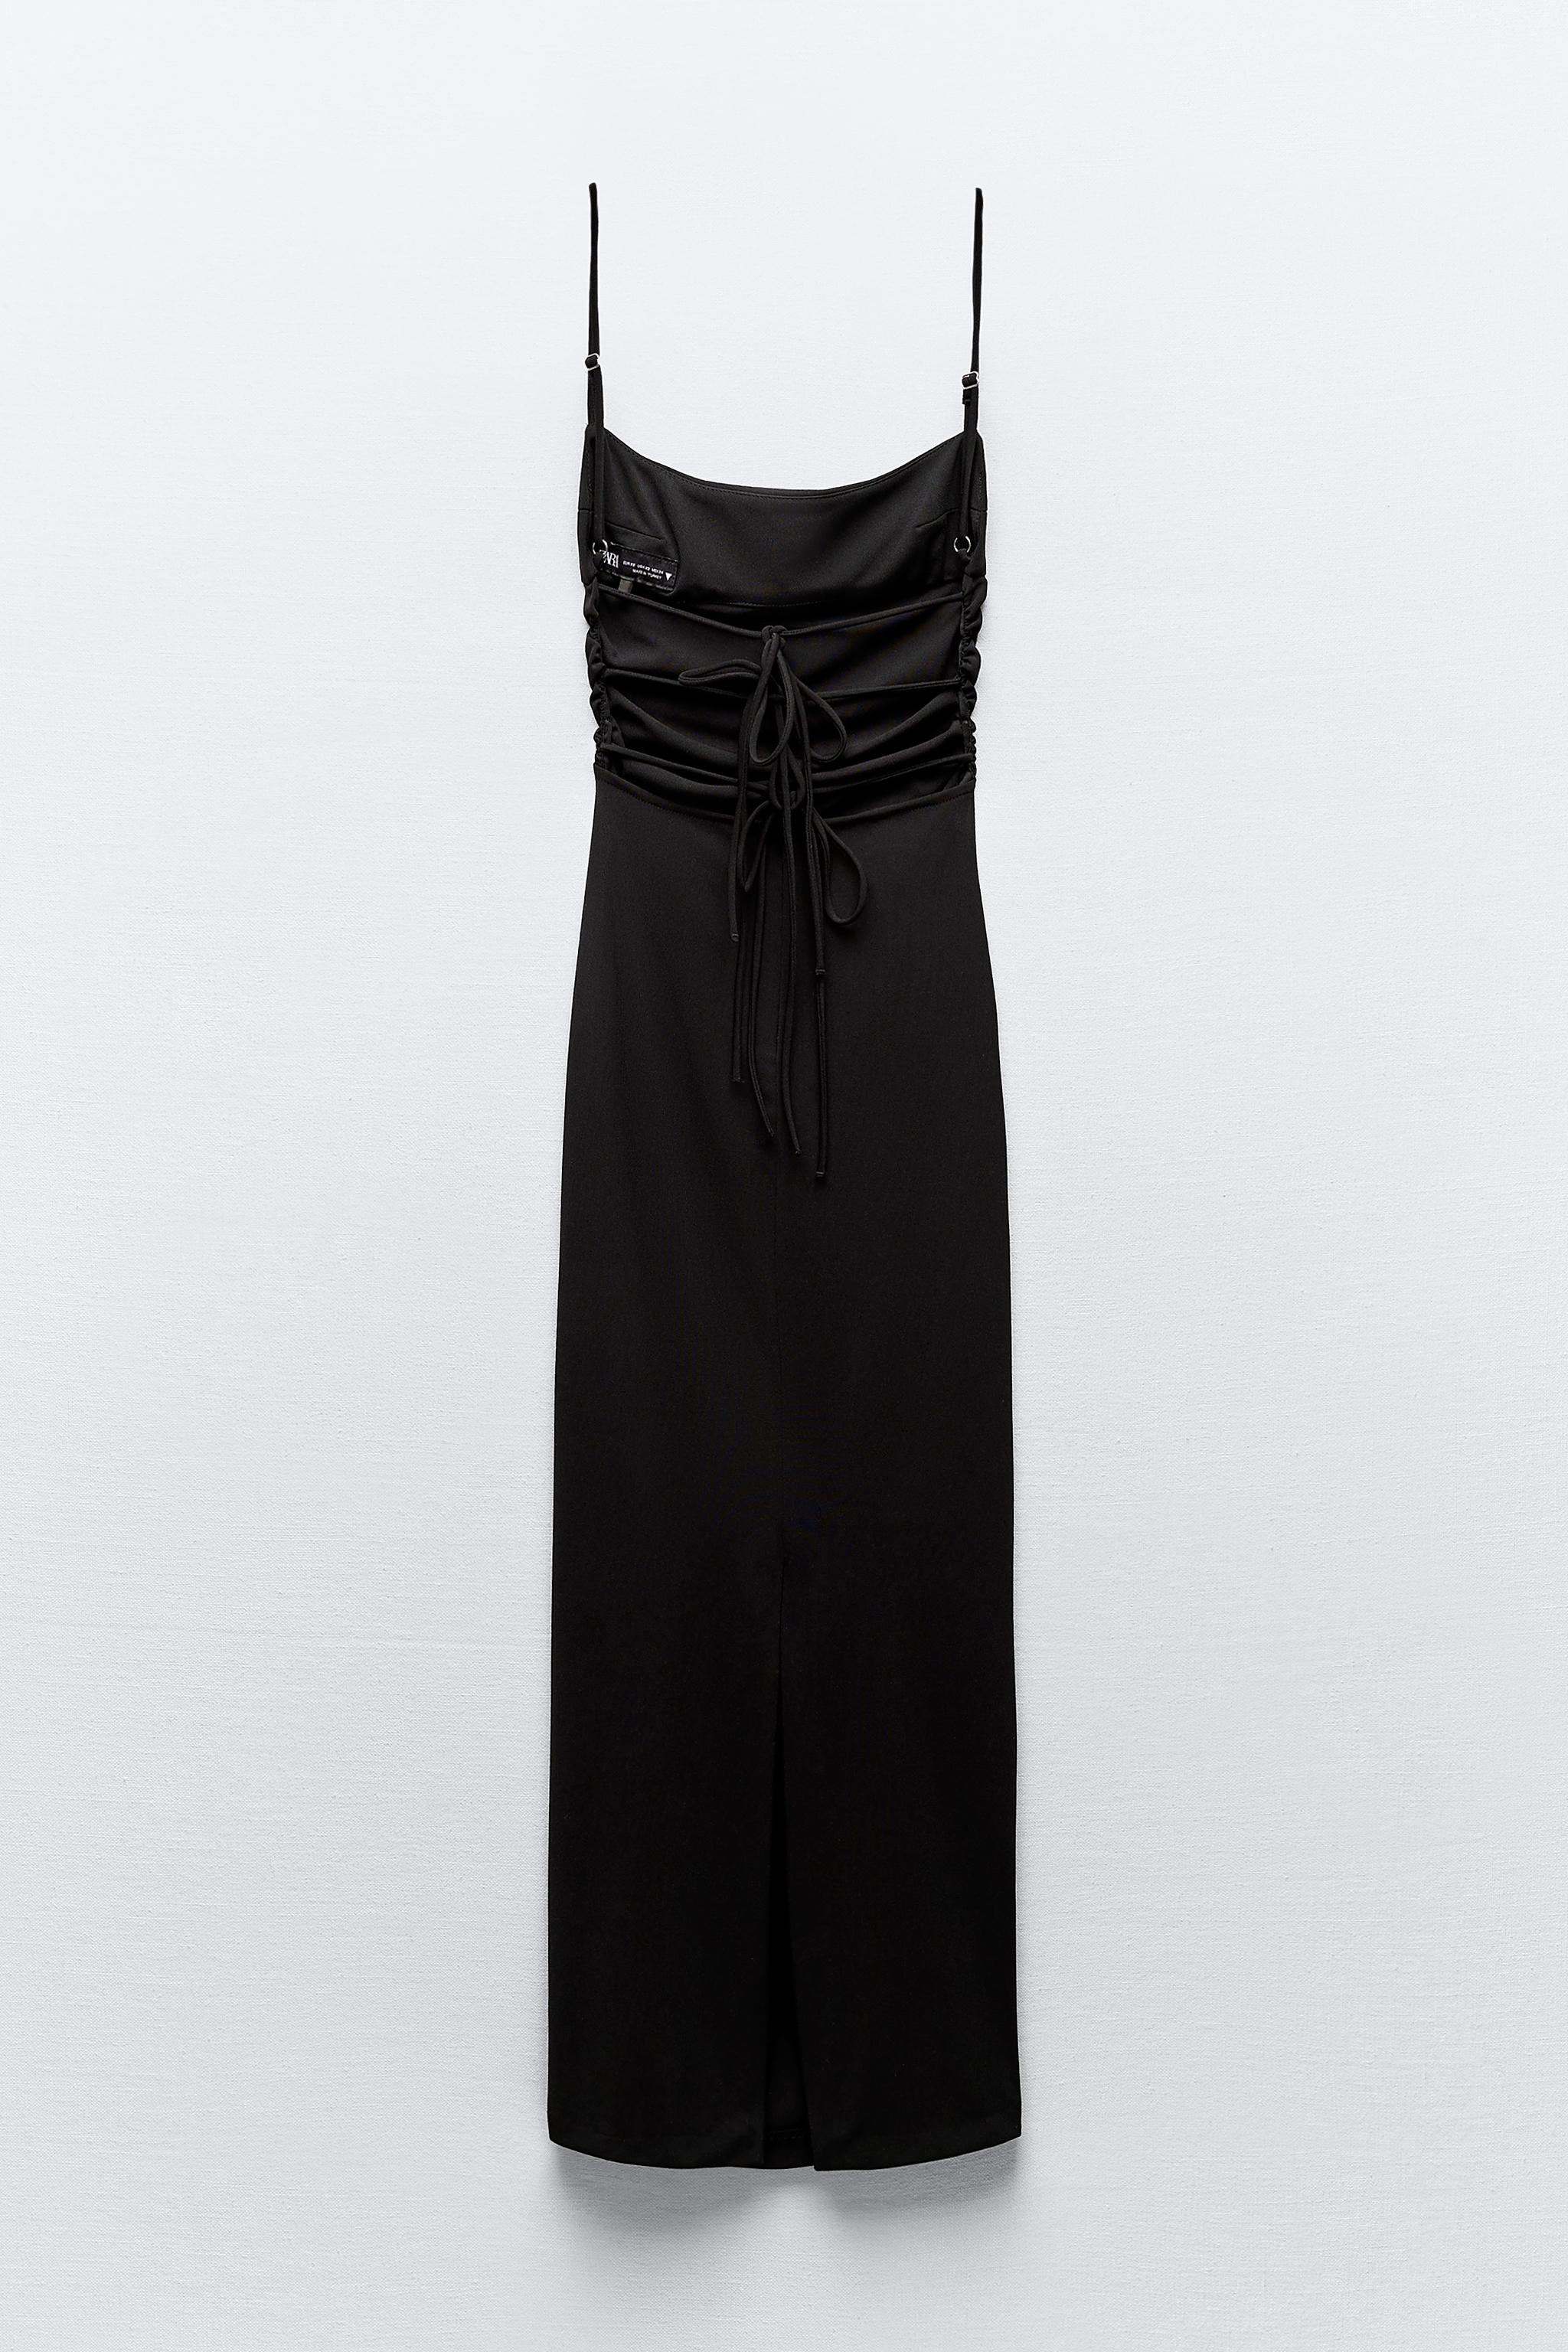 ZARA Black Satin Ruched Strappy Spaghetti Midi Long Evening Cami Dress XS 6  8